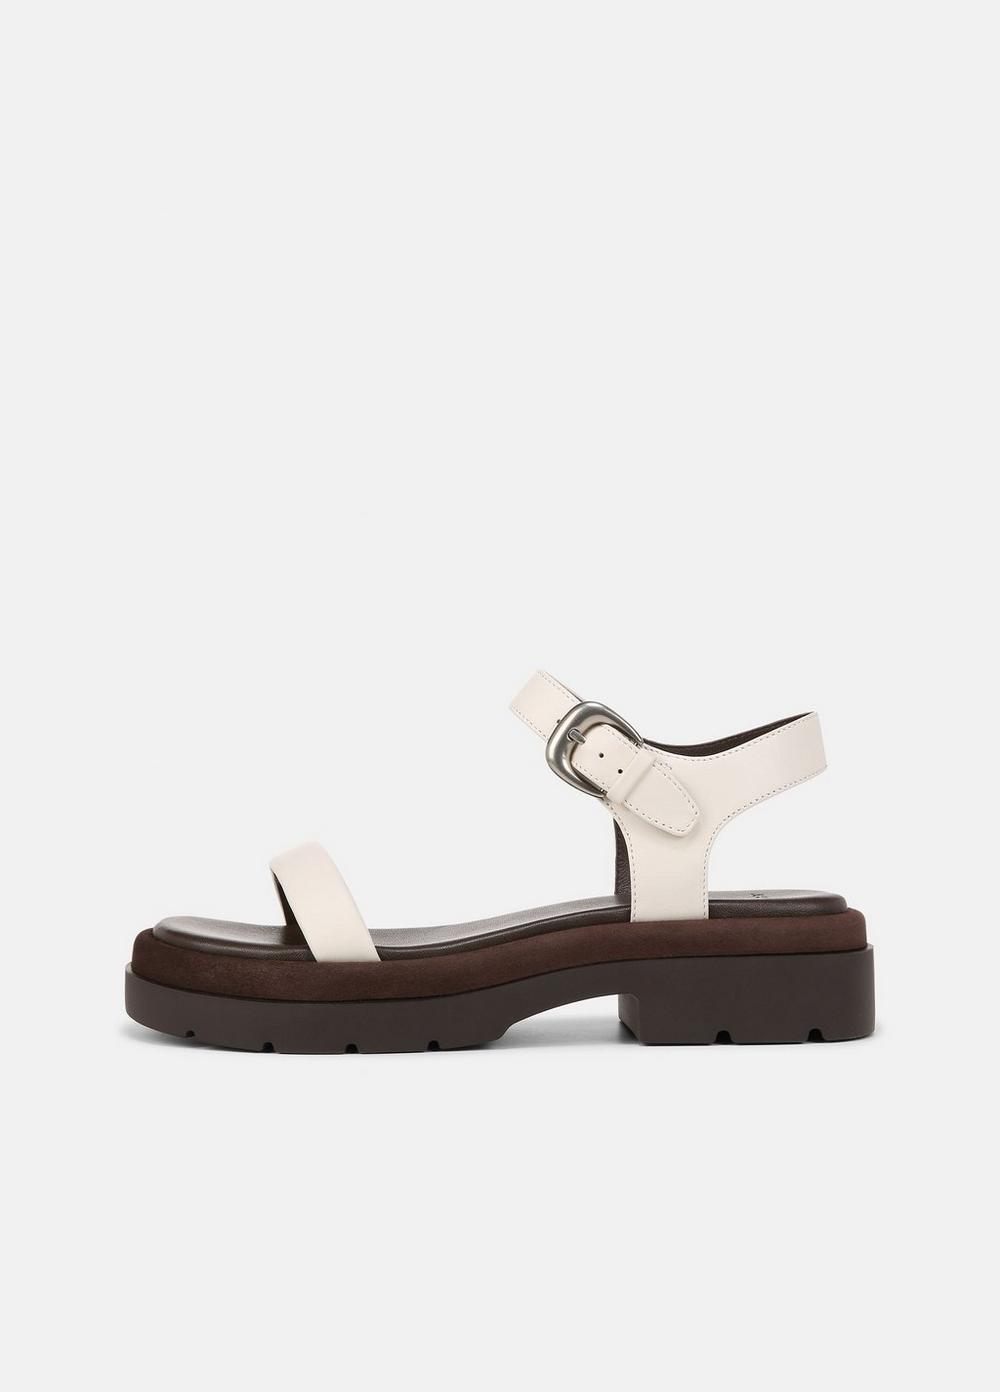 Heloise Leather Lug-Sole Sandal, Milk, Size 9.5 Vince